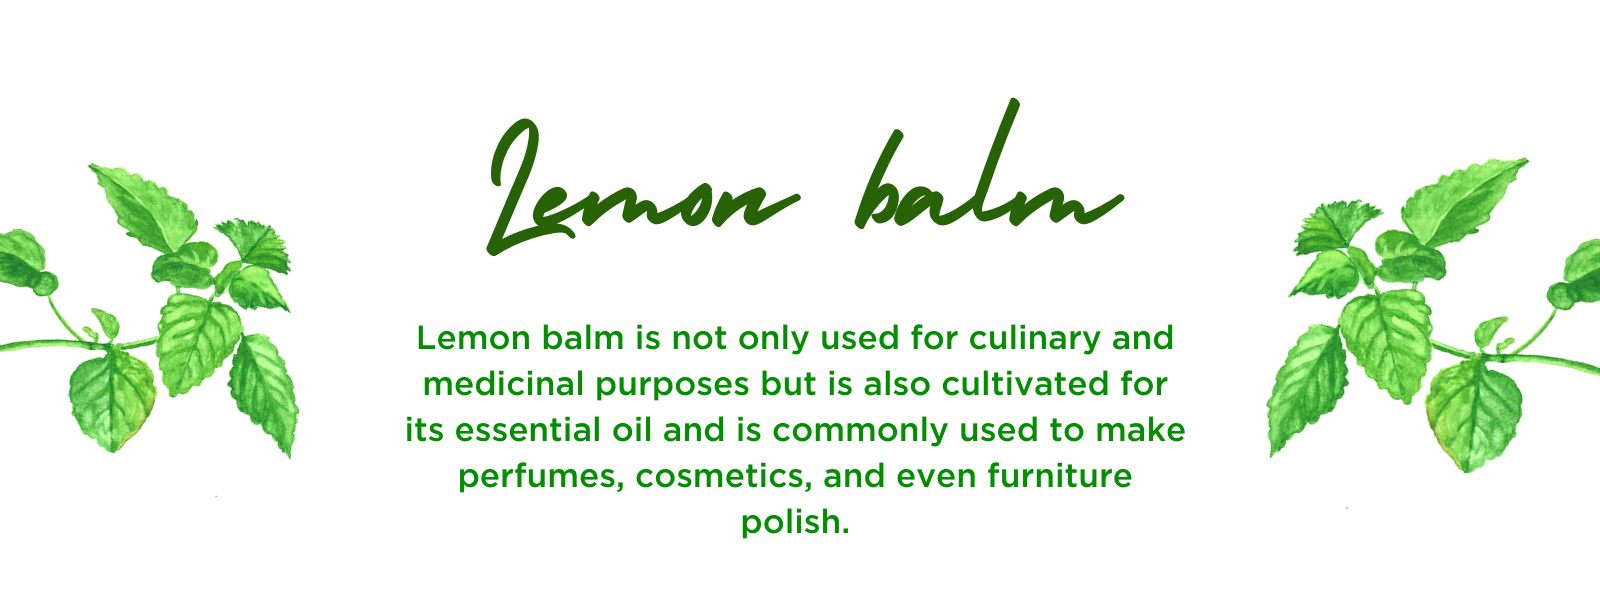 Lemon Balm- Health Benefits, Uses and Important Facts - PotsandPans India